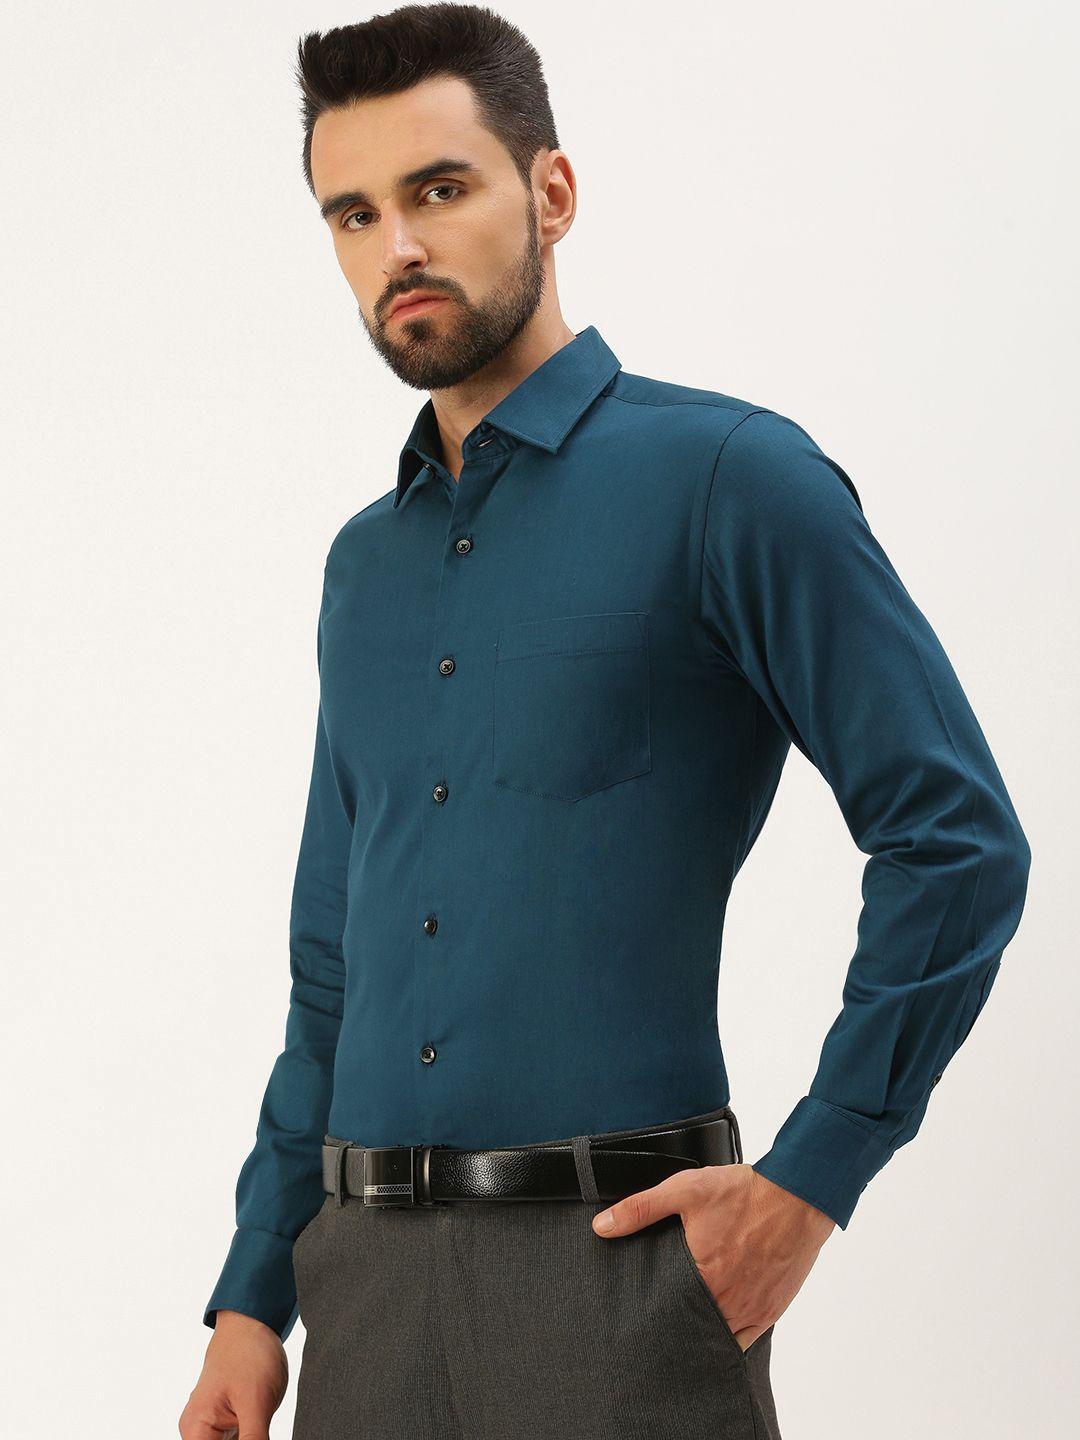 ivoc men teal blue solid cotton classic slim fit formal shirt